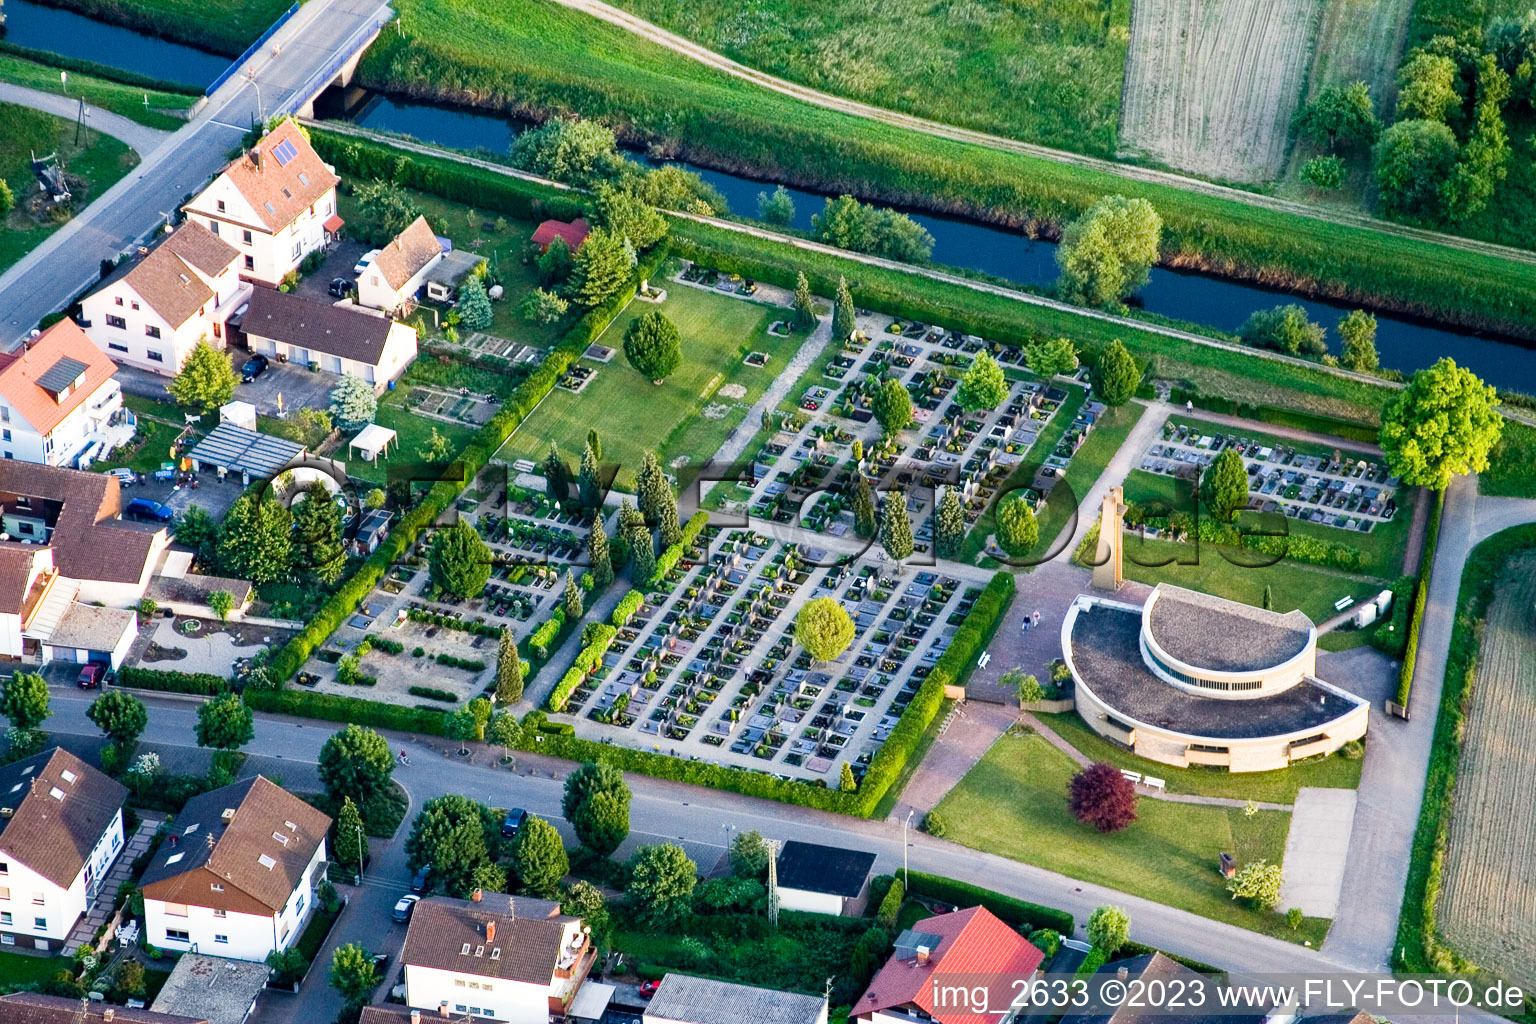 Cemetery in Neuburg in the state Rhineland-Palatinate, Germany